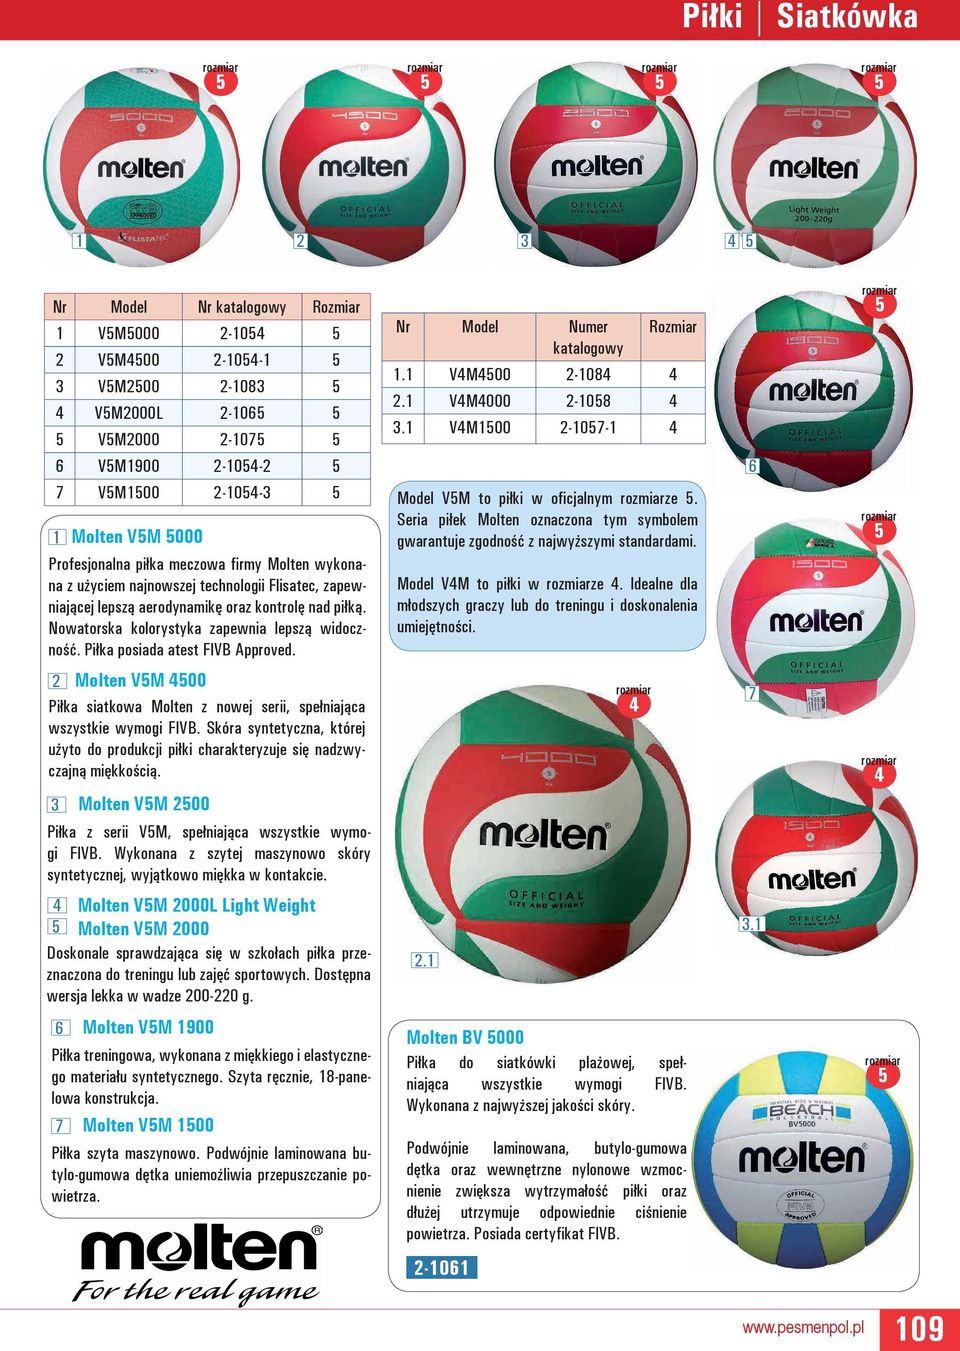 Piłka posiada atest FIVB Approved. Nr Model Numer katalogowy Rozmiar 1.1 V4M400 2-1084 4 2.1 V4M4000 2-108 4 3.1 V4M100 2-107-1 4 Model VM to piłki w oficjalnym ze.